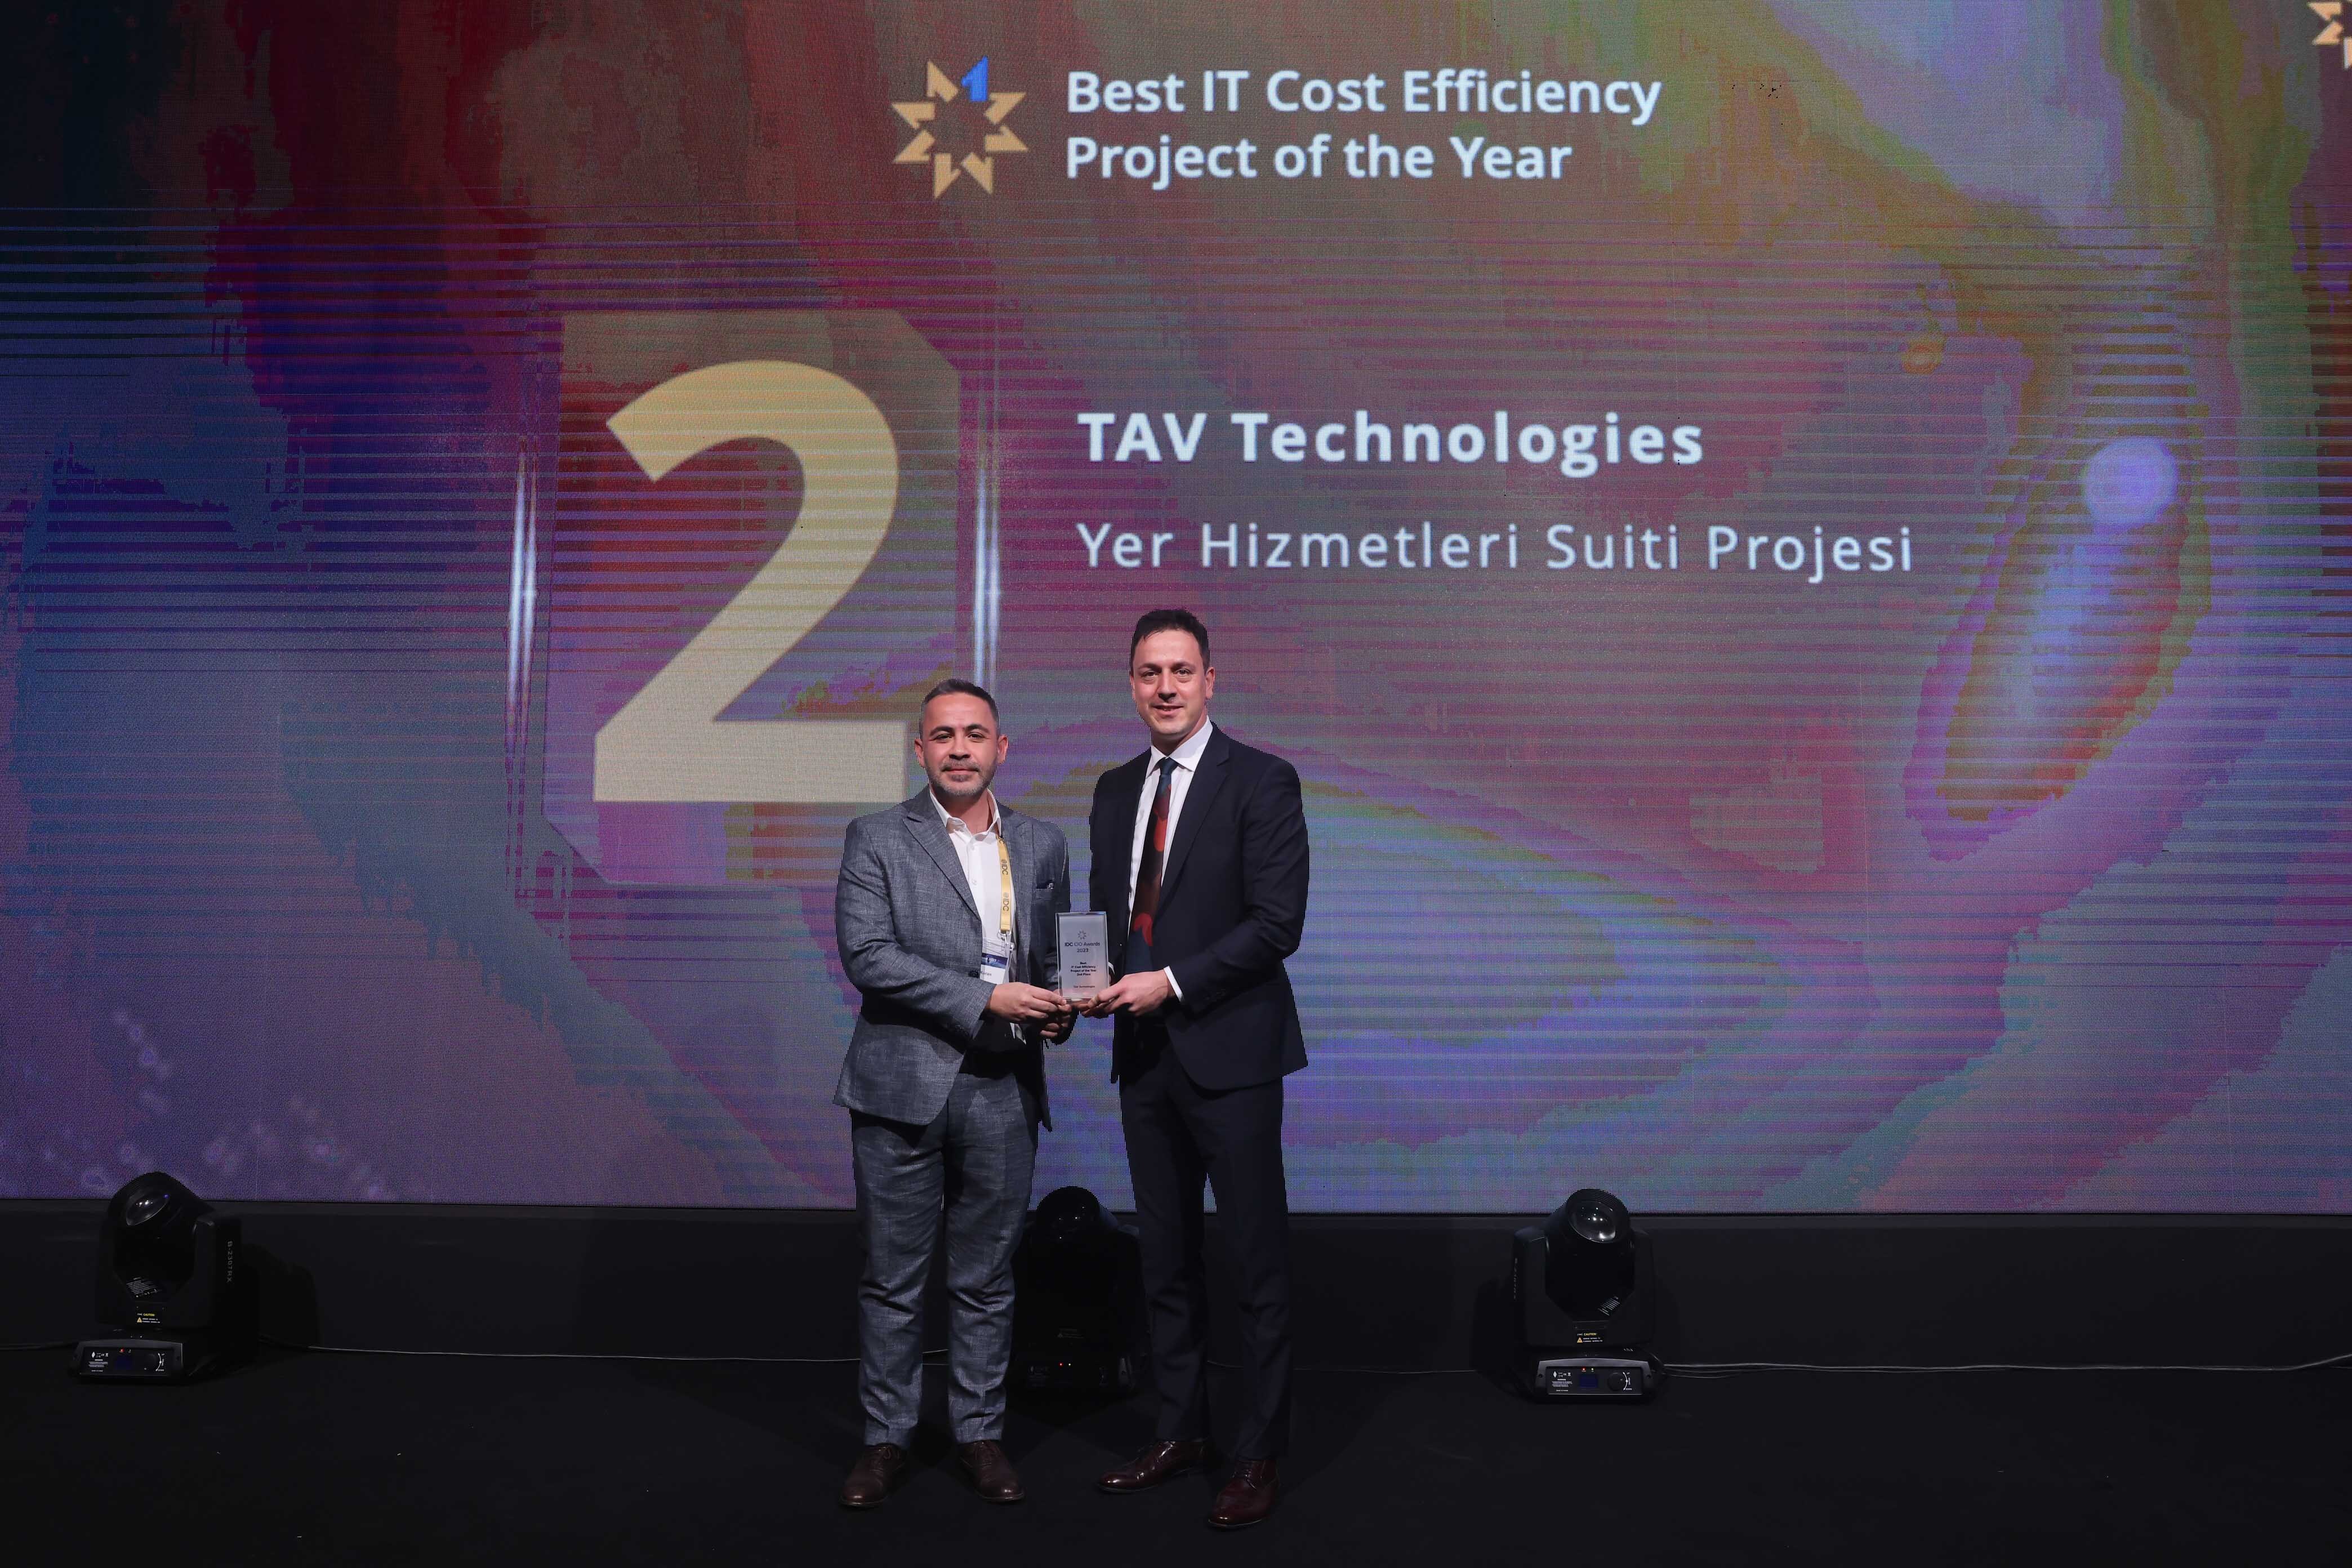 TAV Technologies products